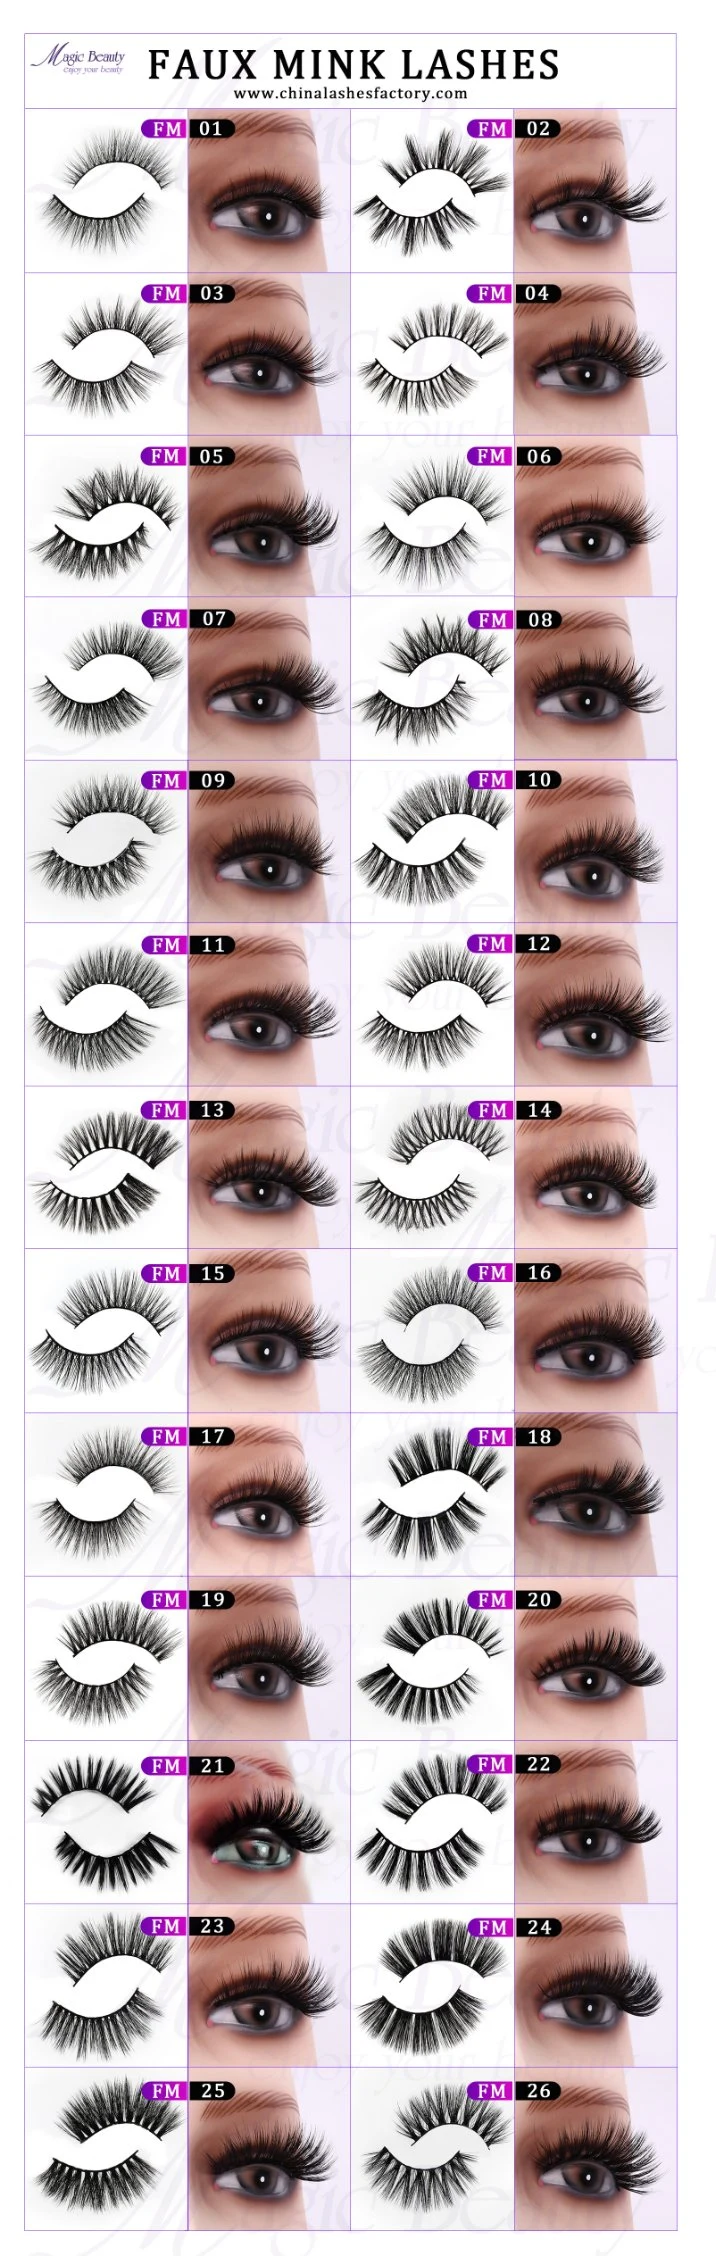 Lashes 2020 3D Faux Mink Eyelashes Vendors 3D Eyelash